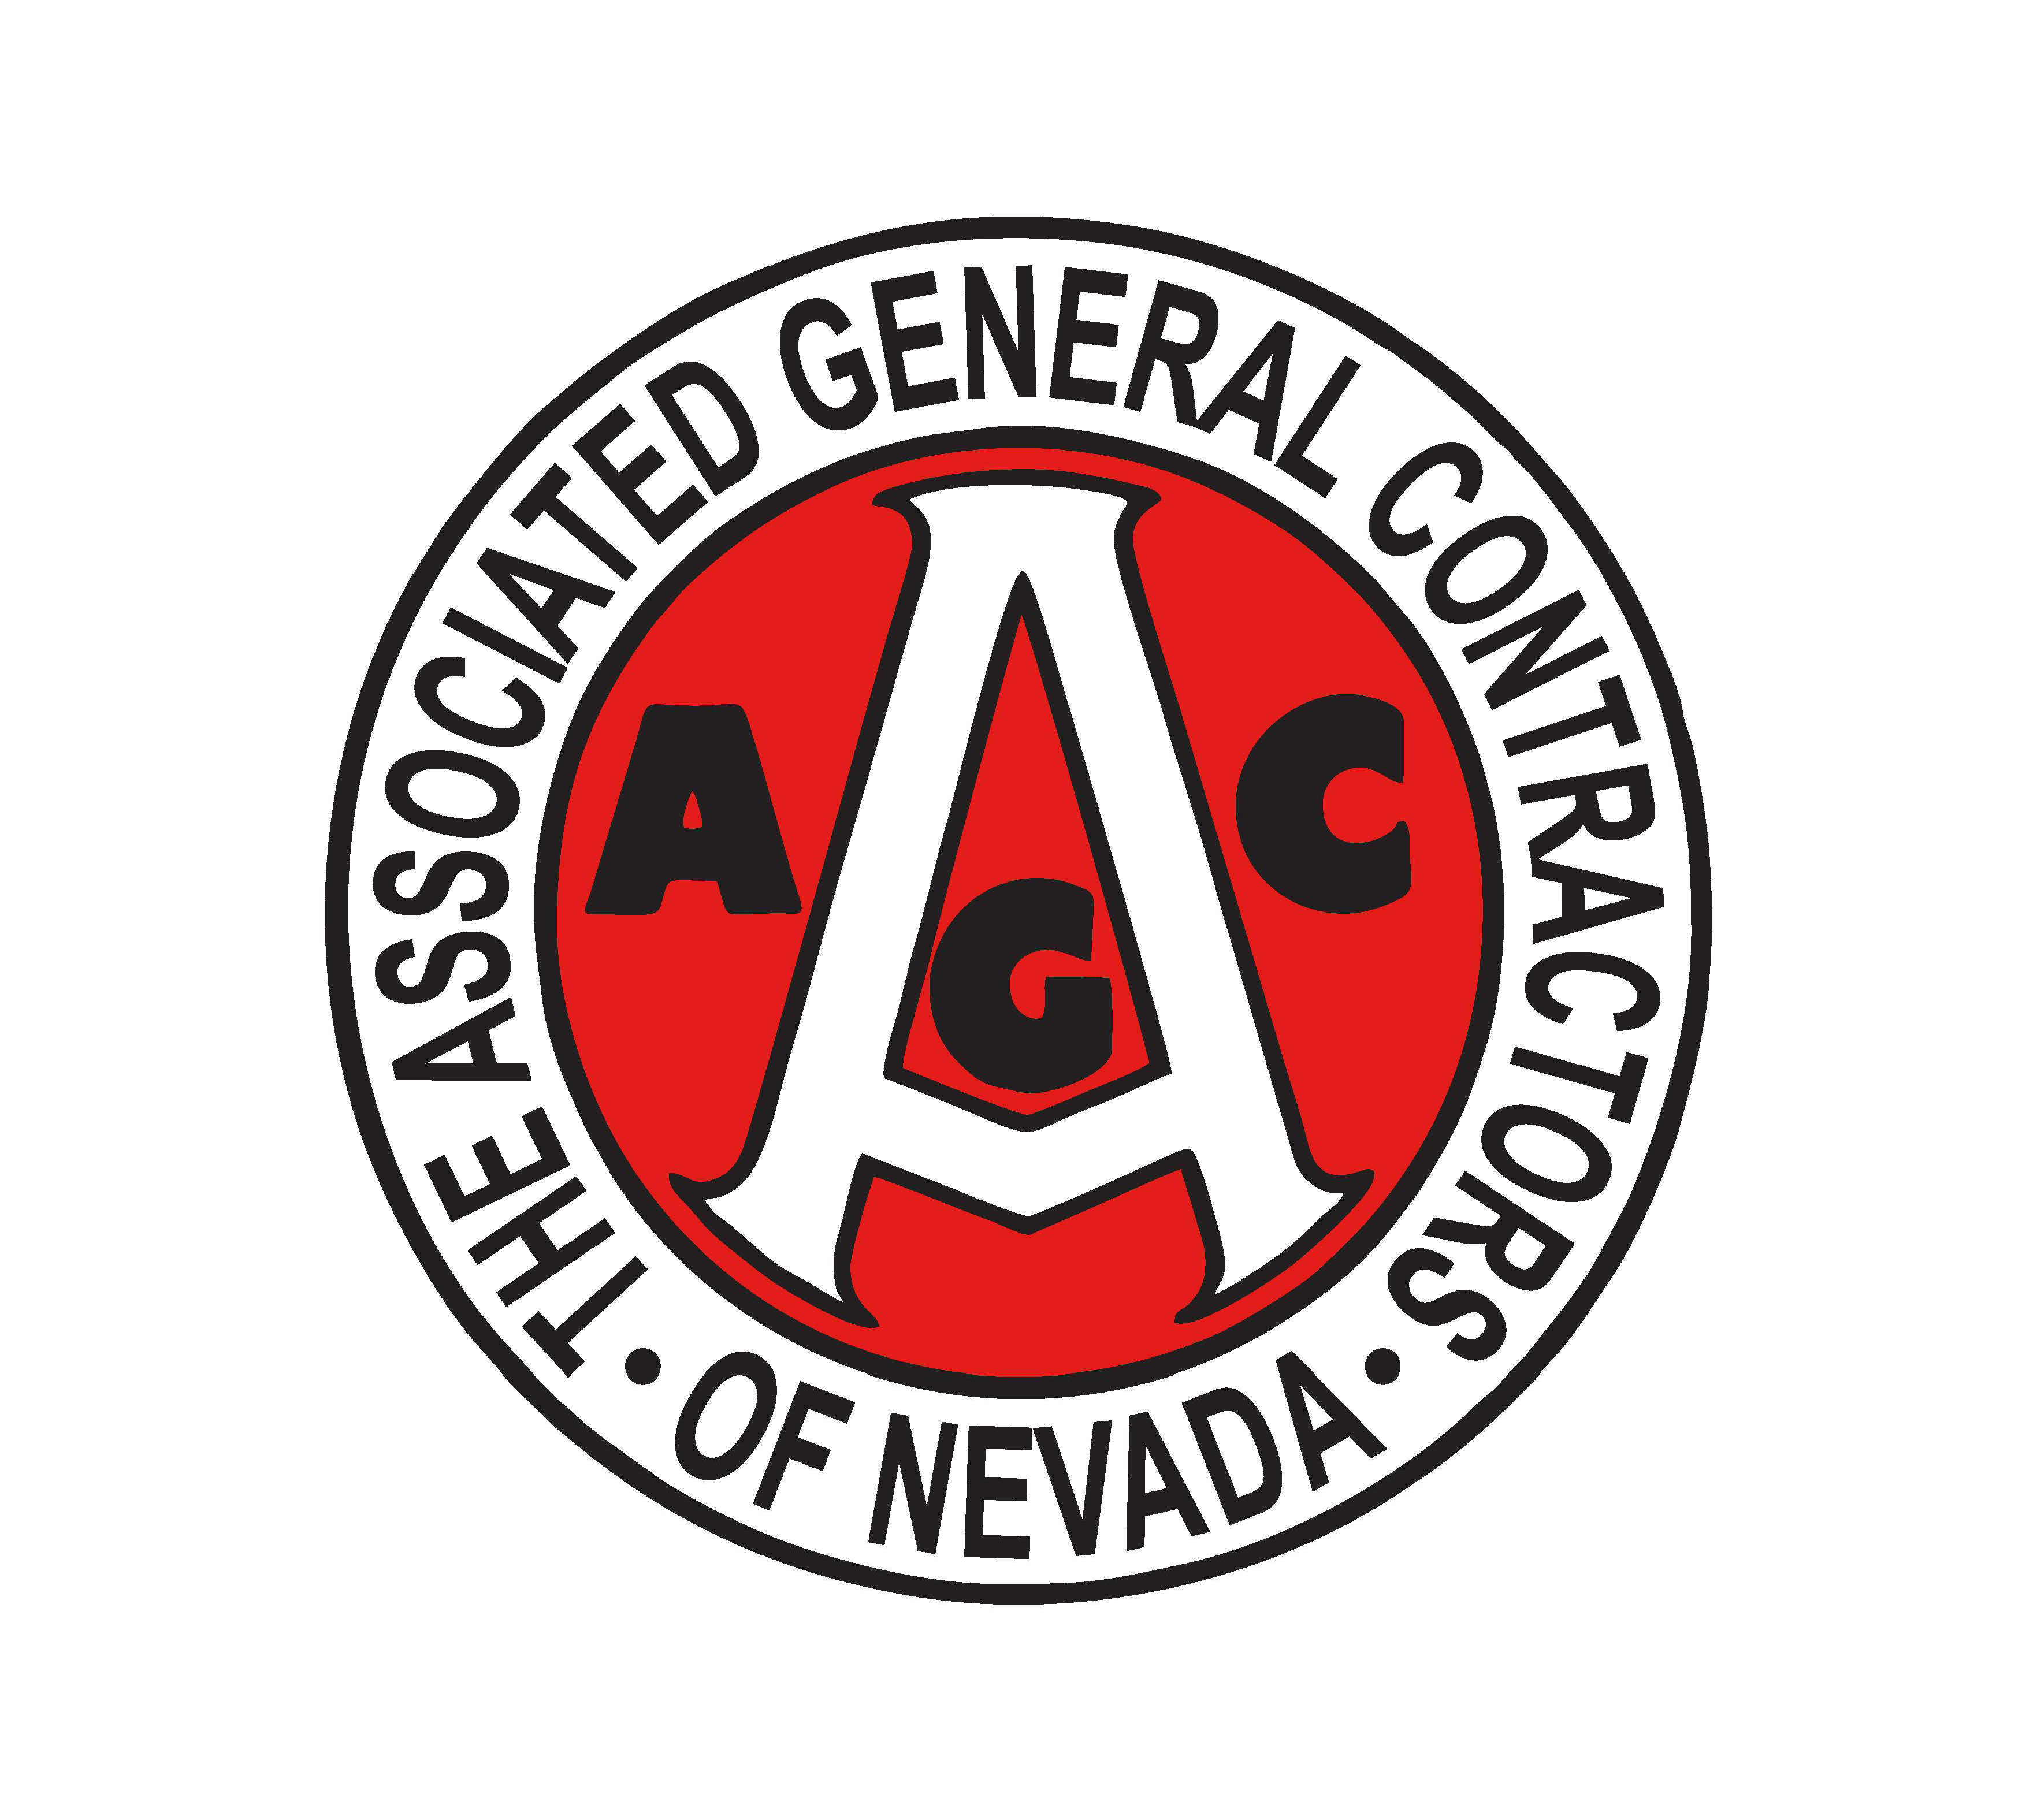 AGC Logo - Nevada Chapter AGC | 5400 Mill Street, Reno, NV 89502 - Home